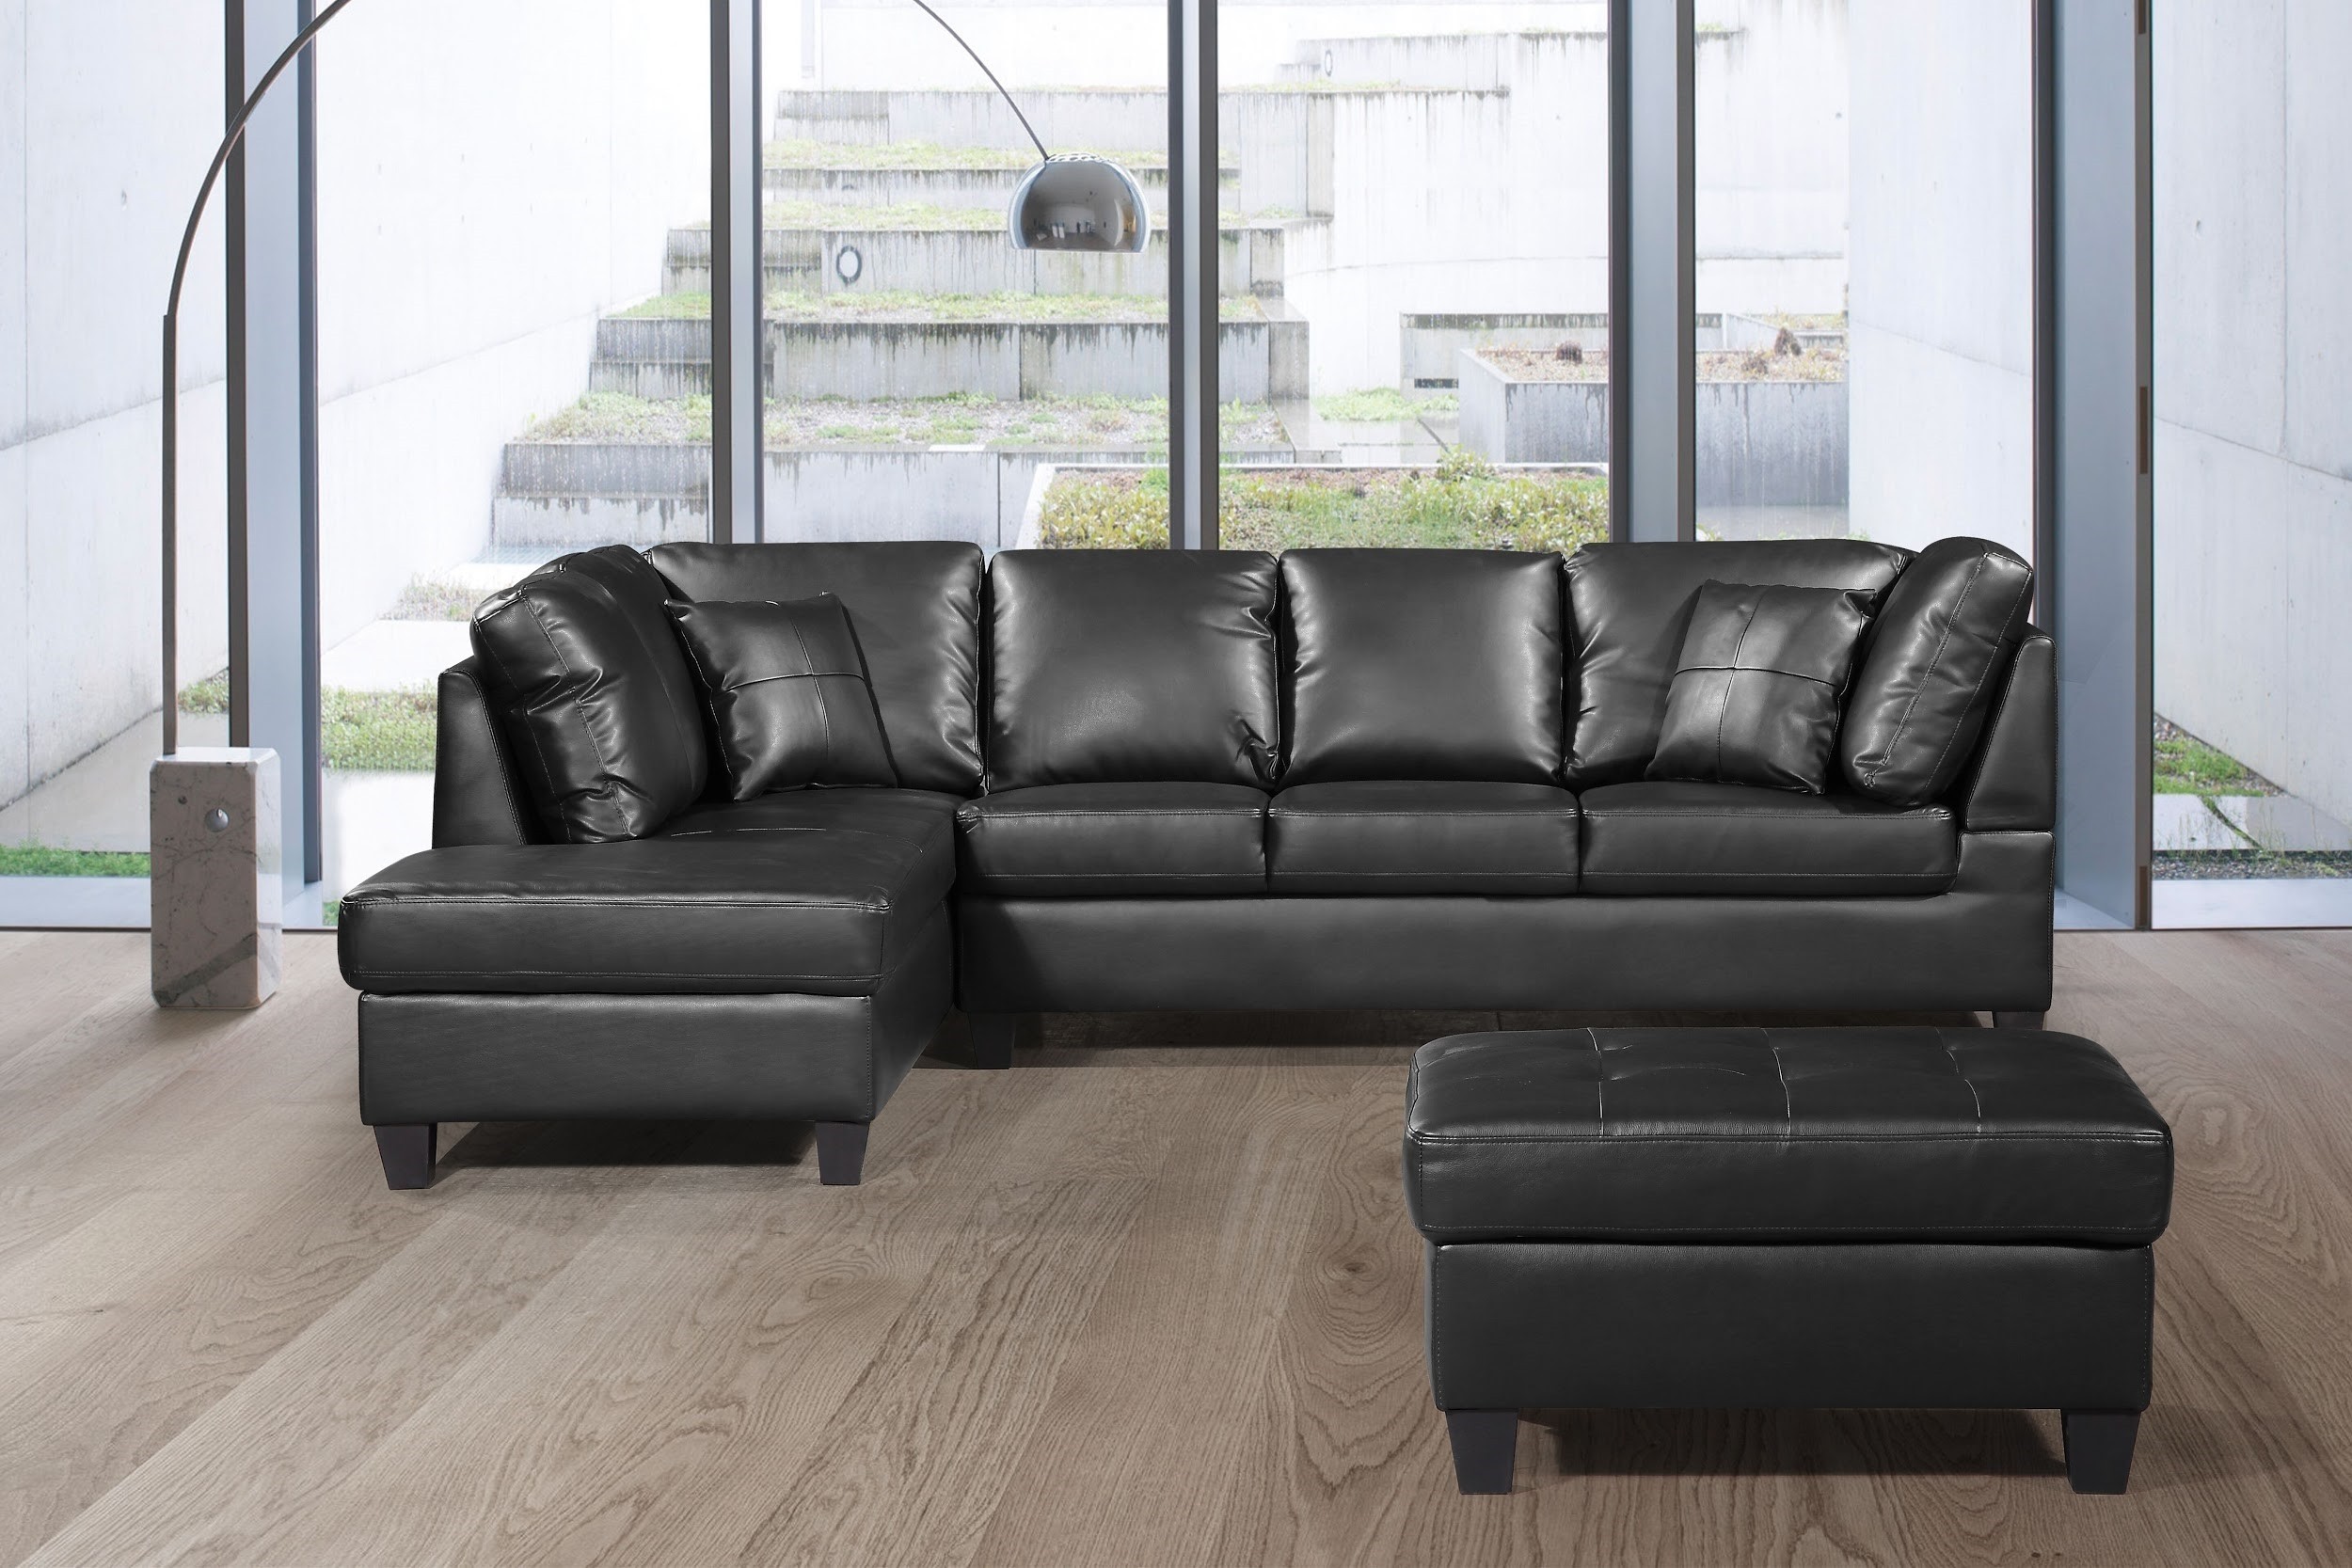 bonded leather sofa durability